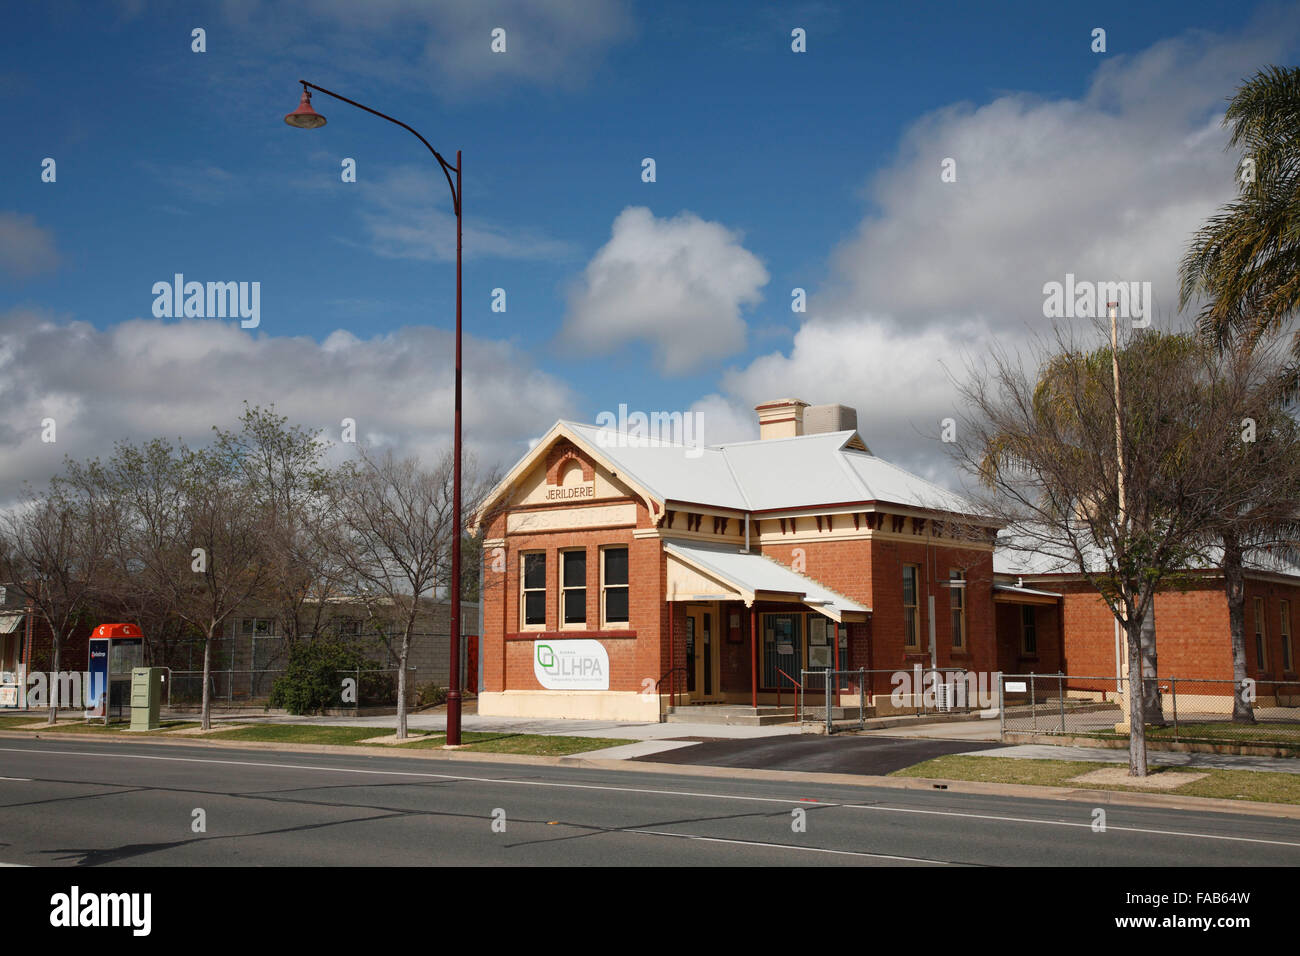 Jerilderie Post Office (1879)  Jerilderie Riverina New South Wales Australia Stock Photo